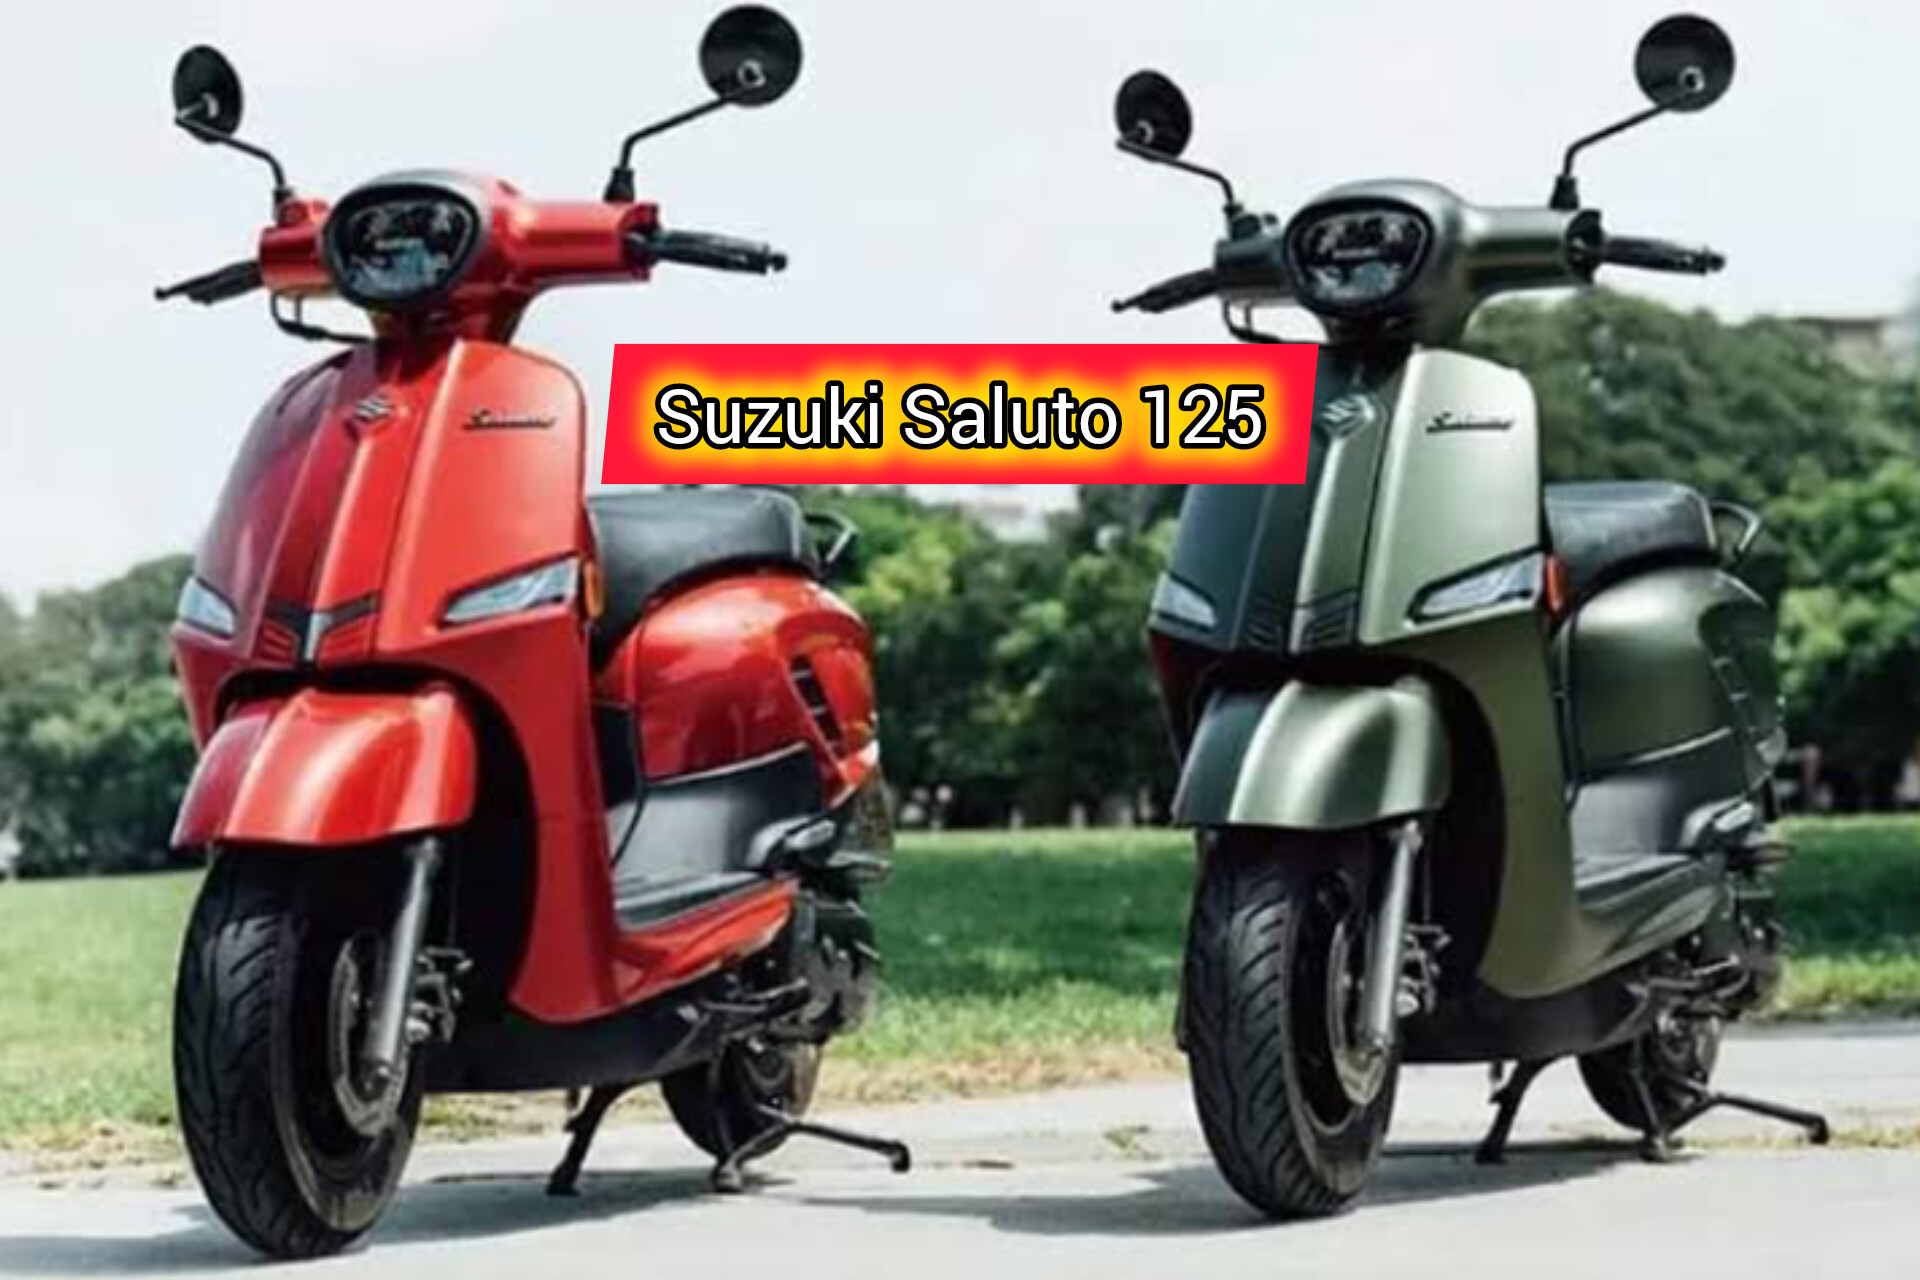 Suzuki Saluto 125: Skutik Retro yang Siap Saingi Honda Scoopy dan Yamaha Fazzio